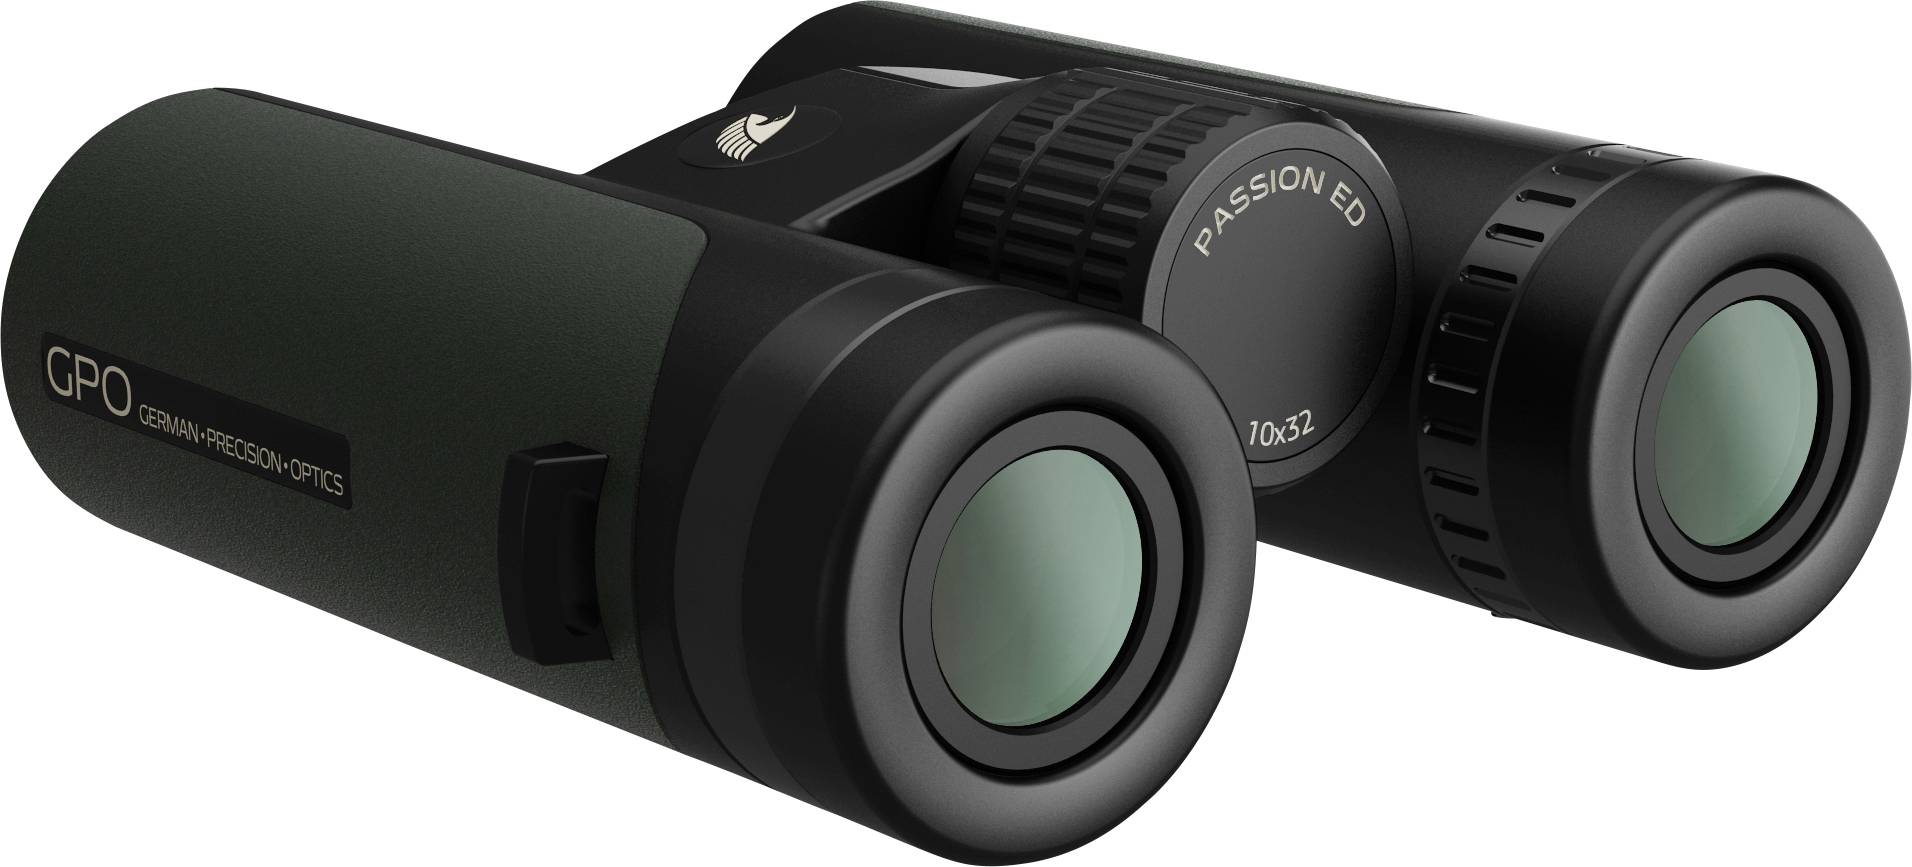 Product Image of GPO Passion ED 10x32 Binoculars - Black/Green